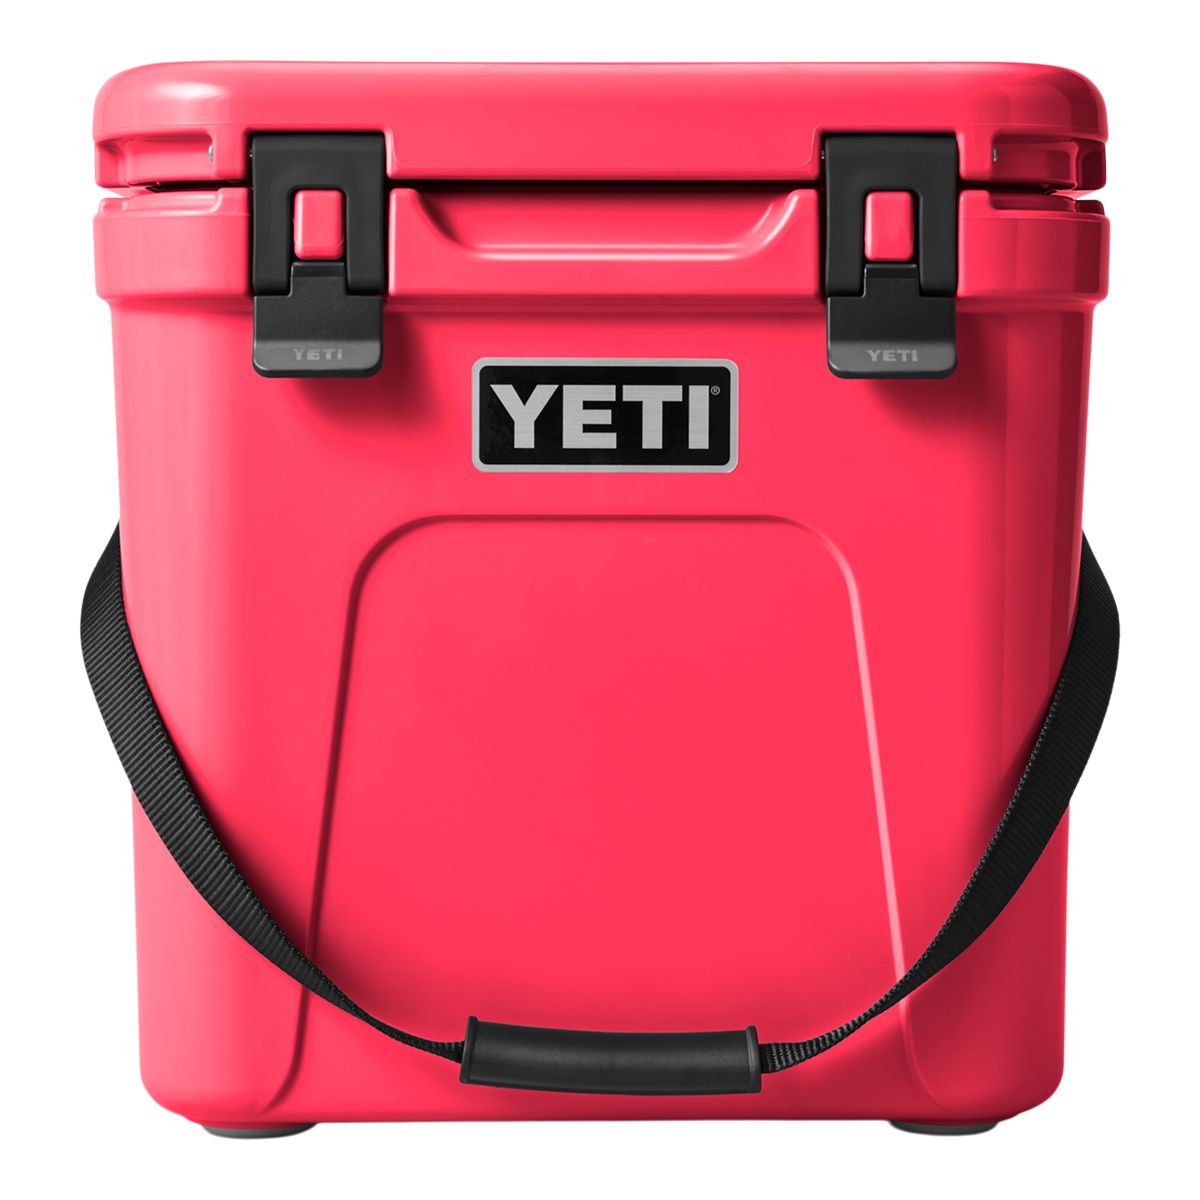 YETI Roadie 24 Insulated Hard Cooler - Bimini Pink | SportChek